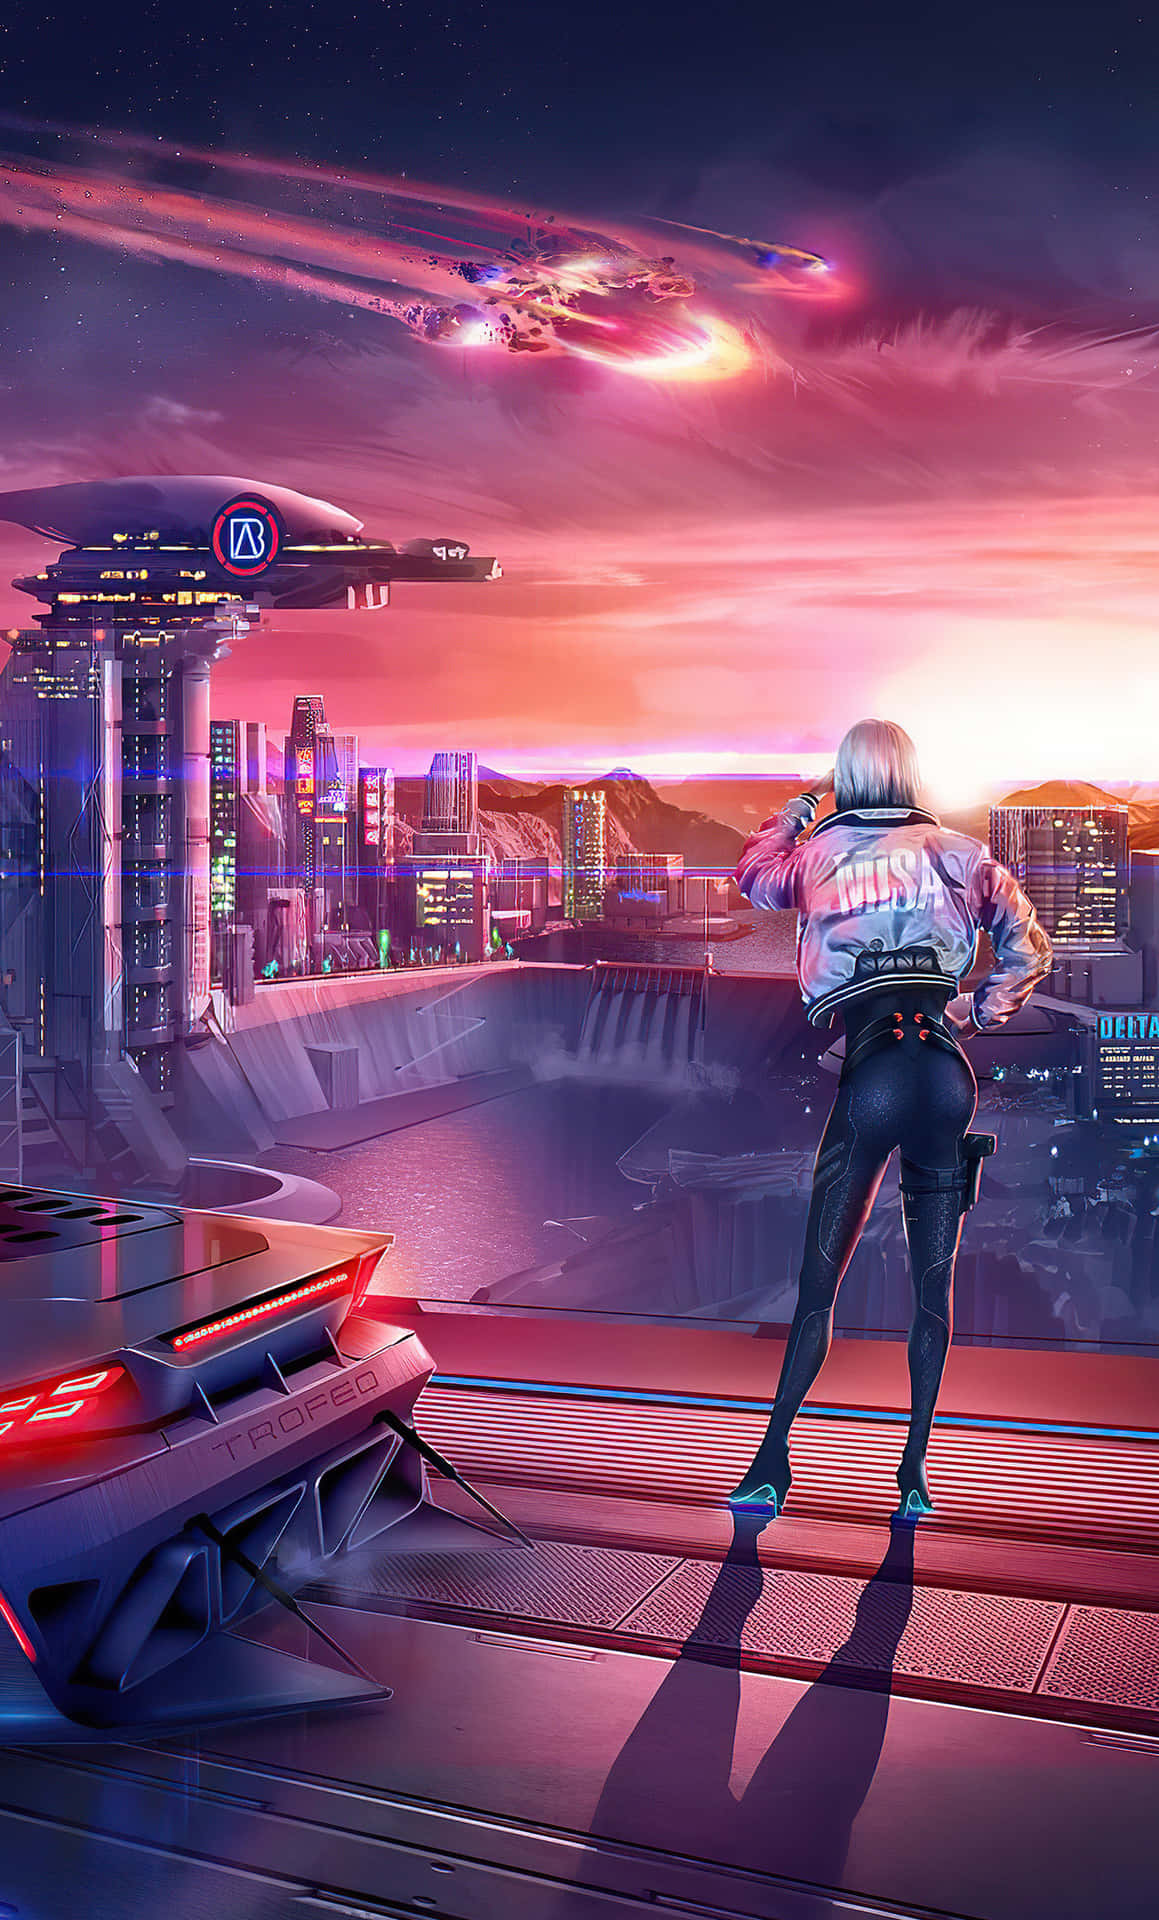 "The glistening metropolis of Night City, located in the breathtakingly futuristic world of Cyberpunk." Wallpaper